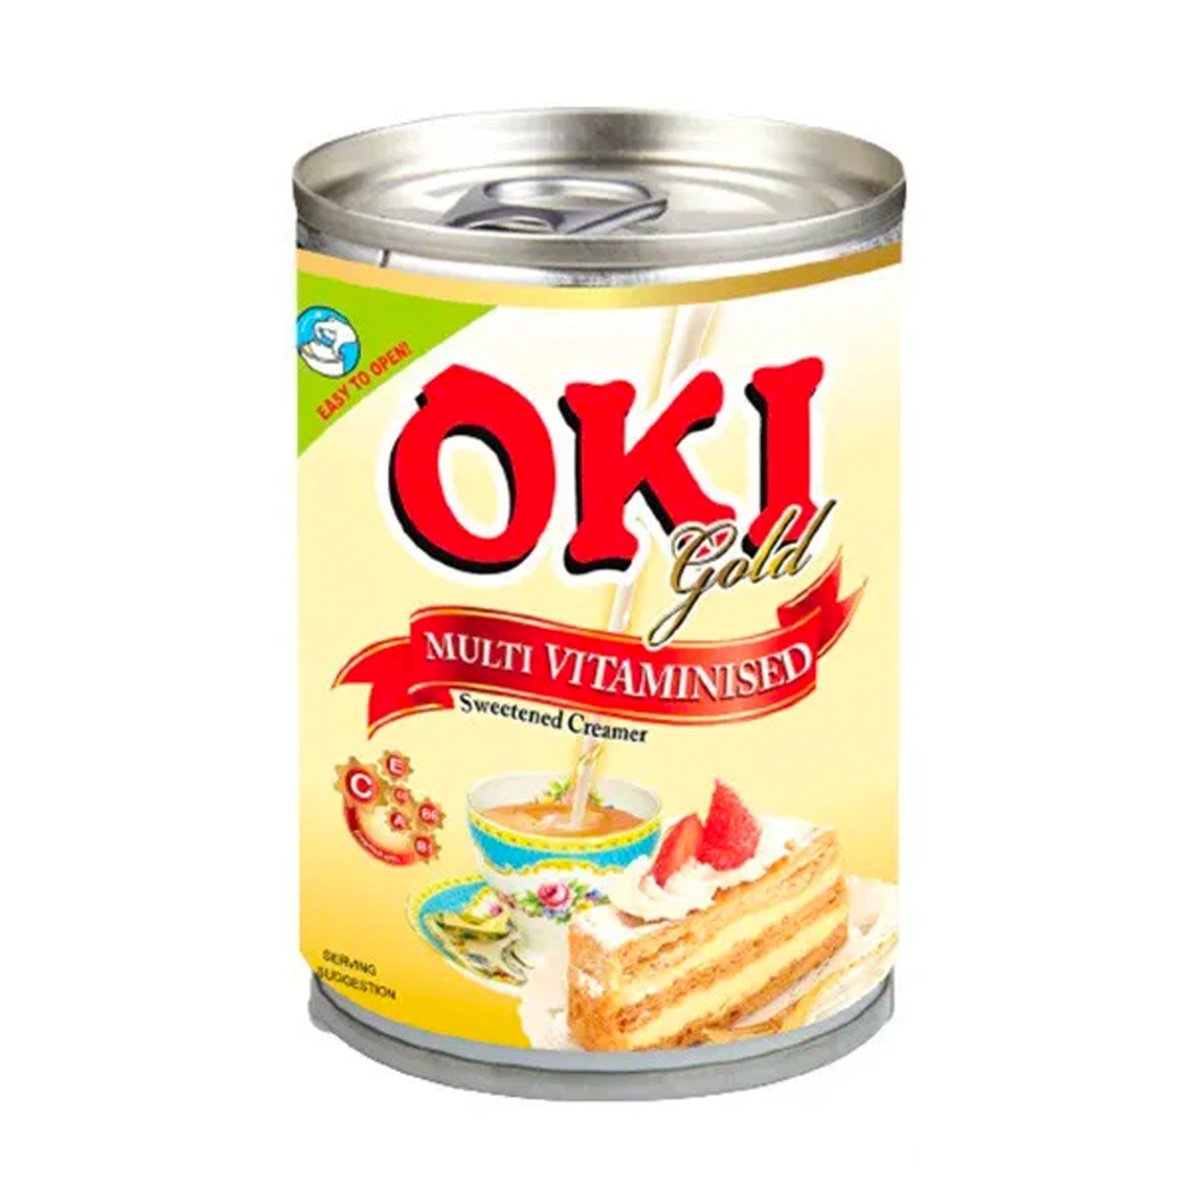 Oki Gold Multi-Vitaminised Sweetened Creamer 500g